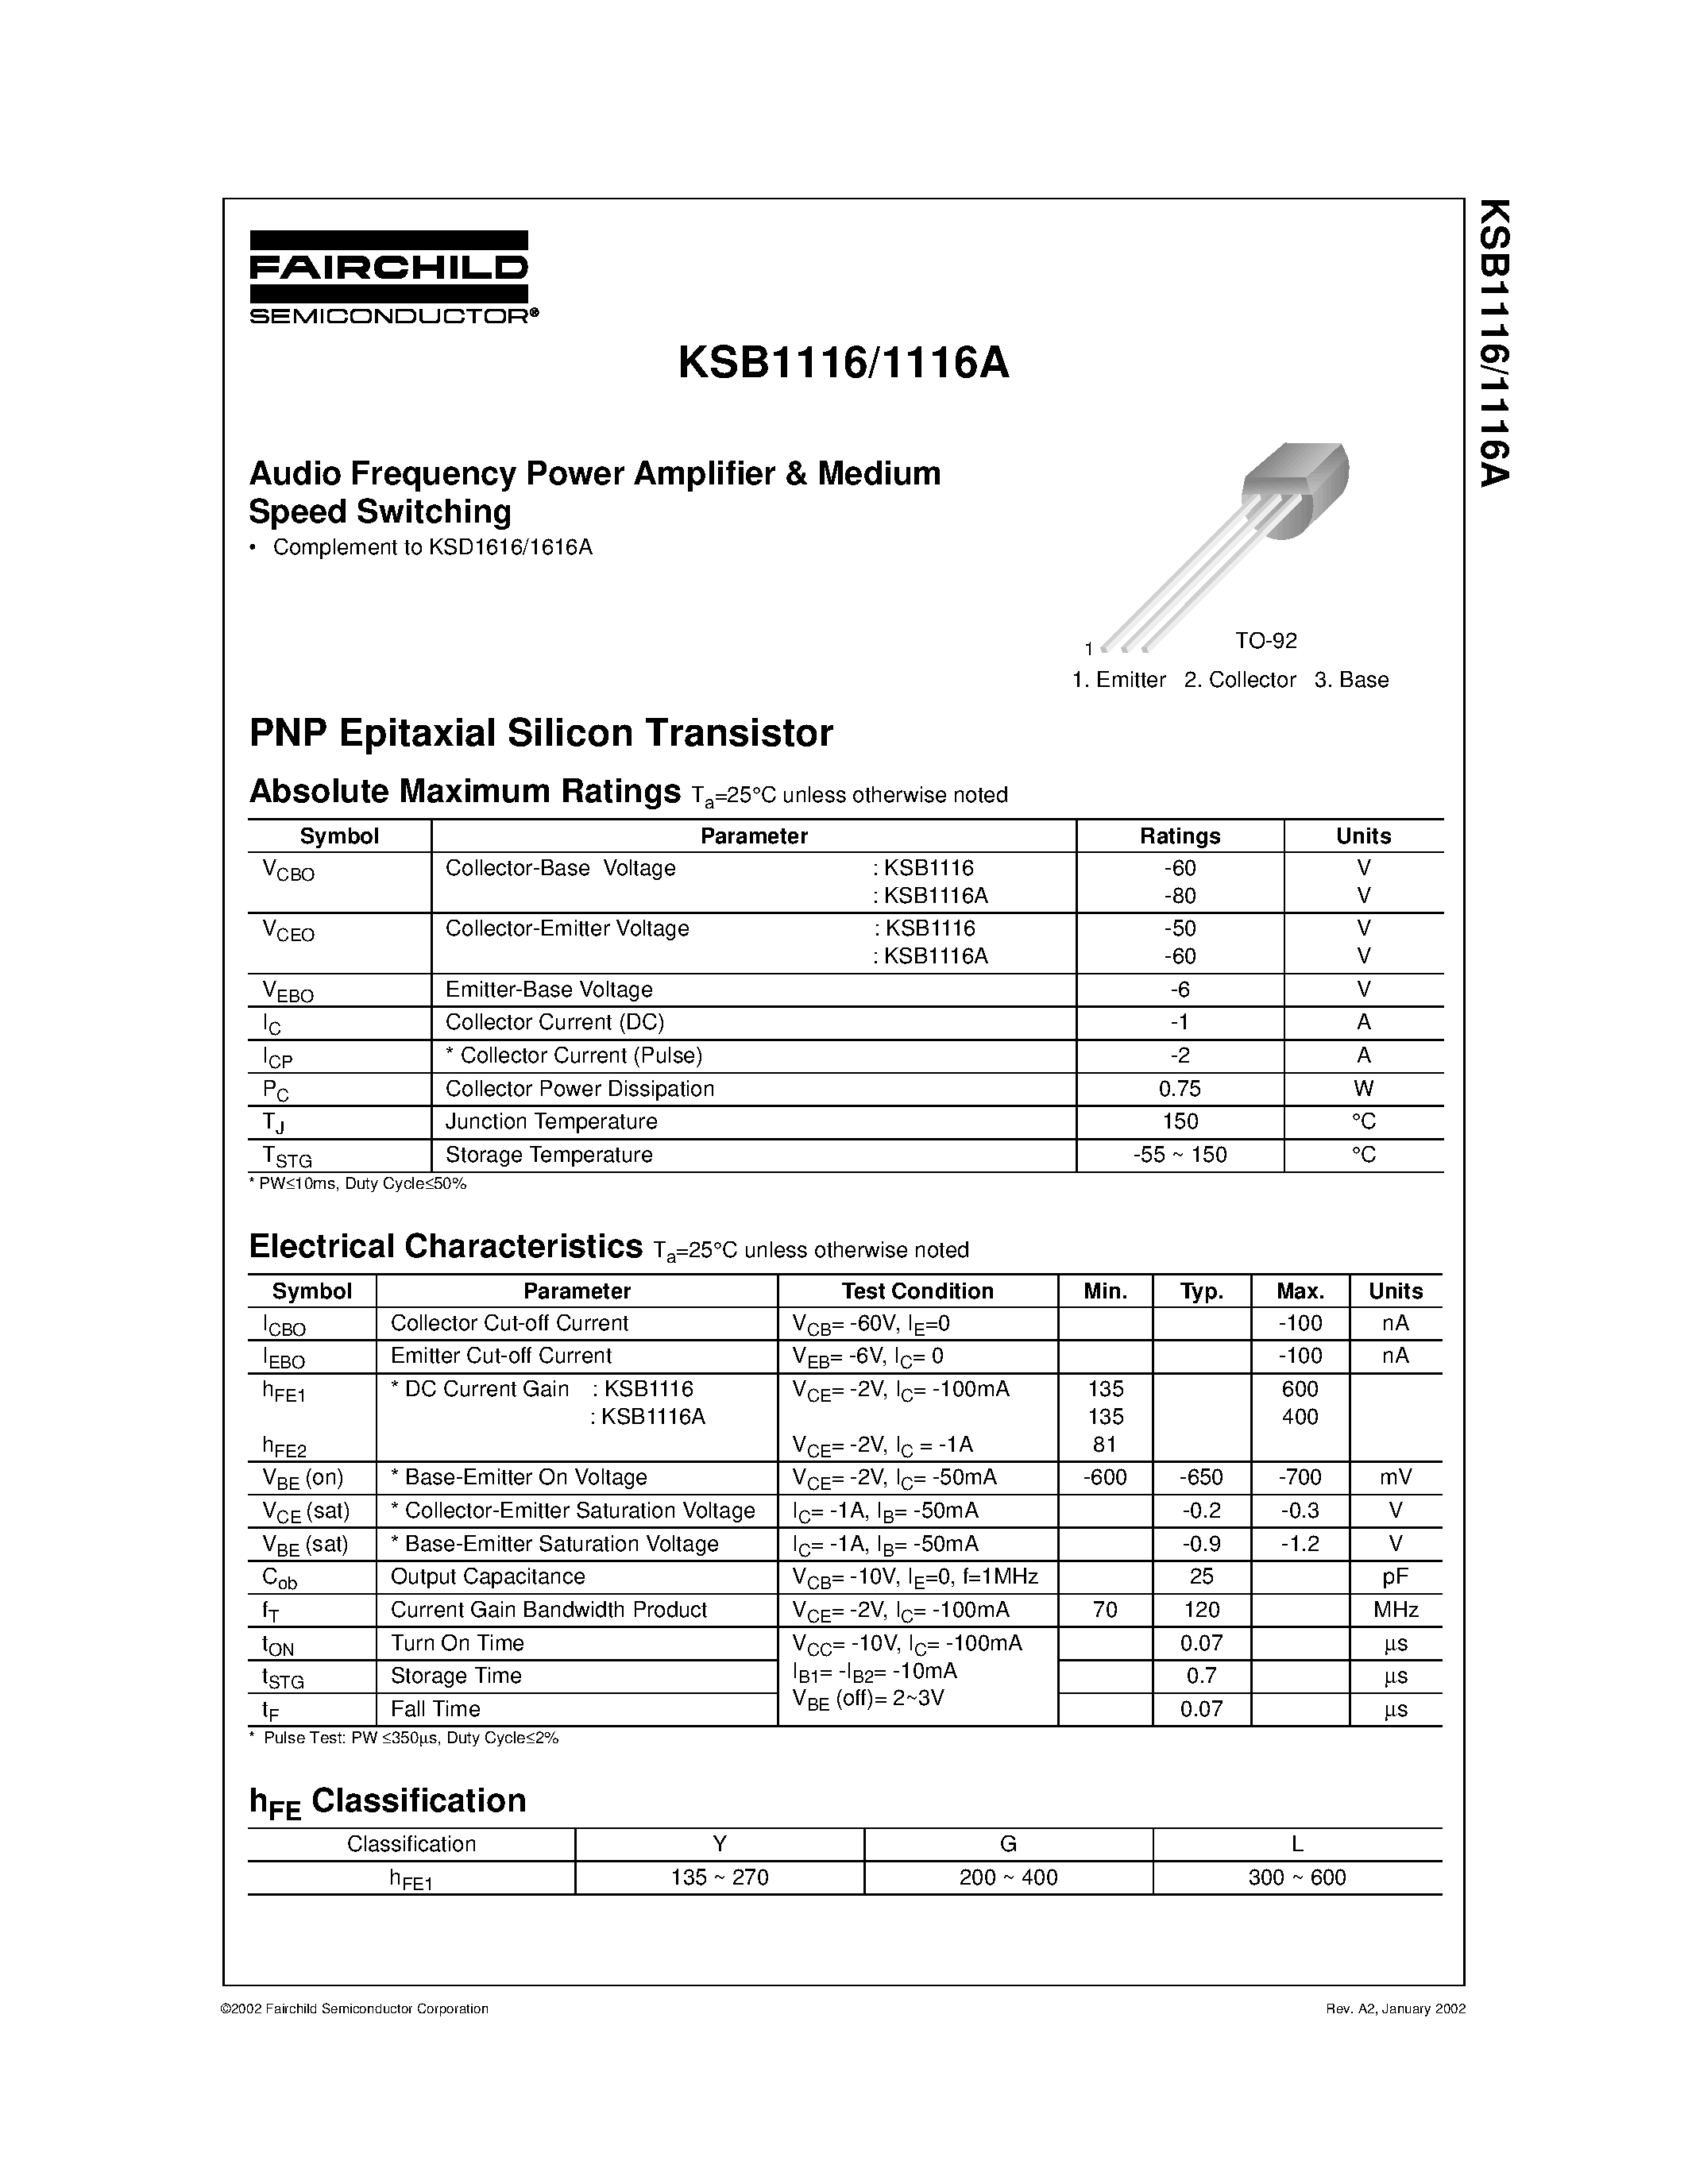 Datasheet KSB1116 - Audio Frequency Power Amplifier & Medium Speed Switching page 1